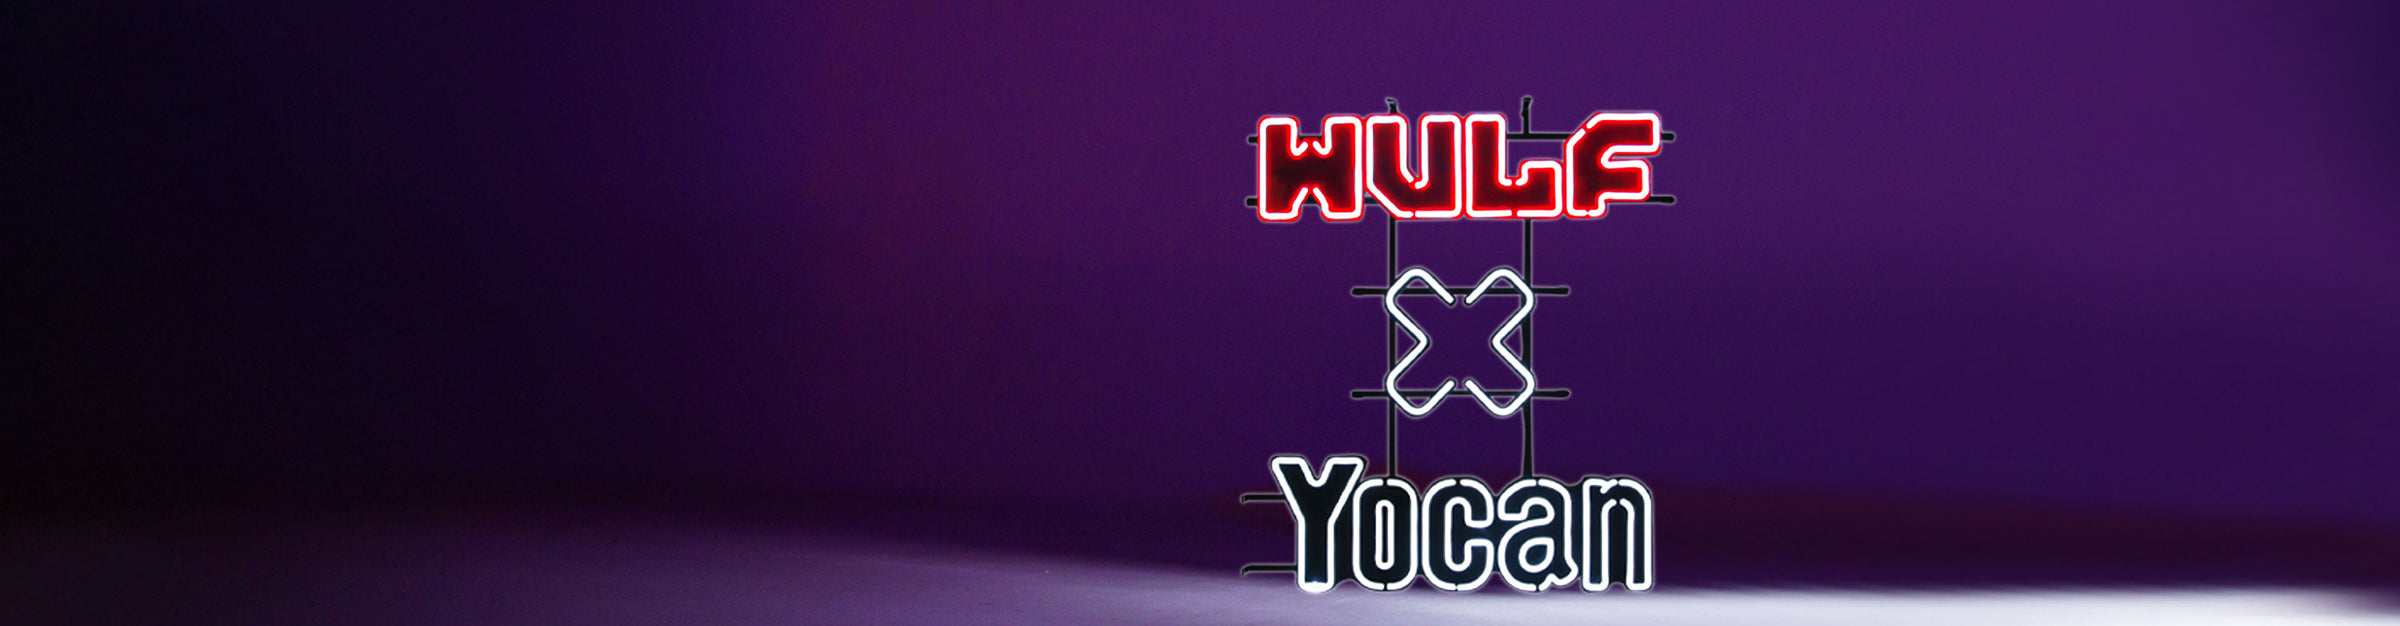 Got Vape Wholesale Wulf x Yocan Neon Sign inside studio with purple lighting